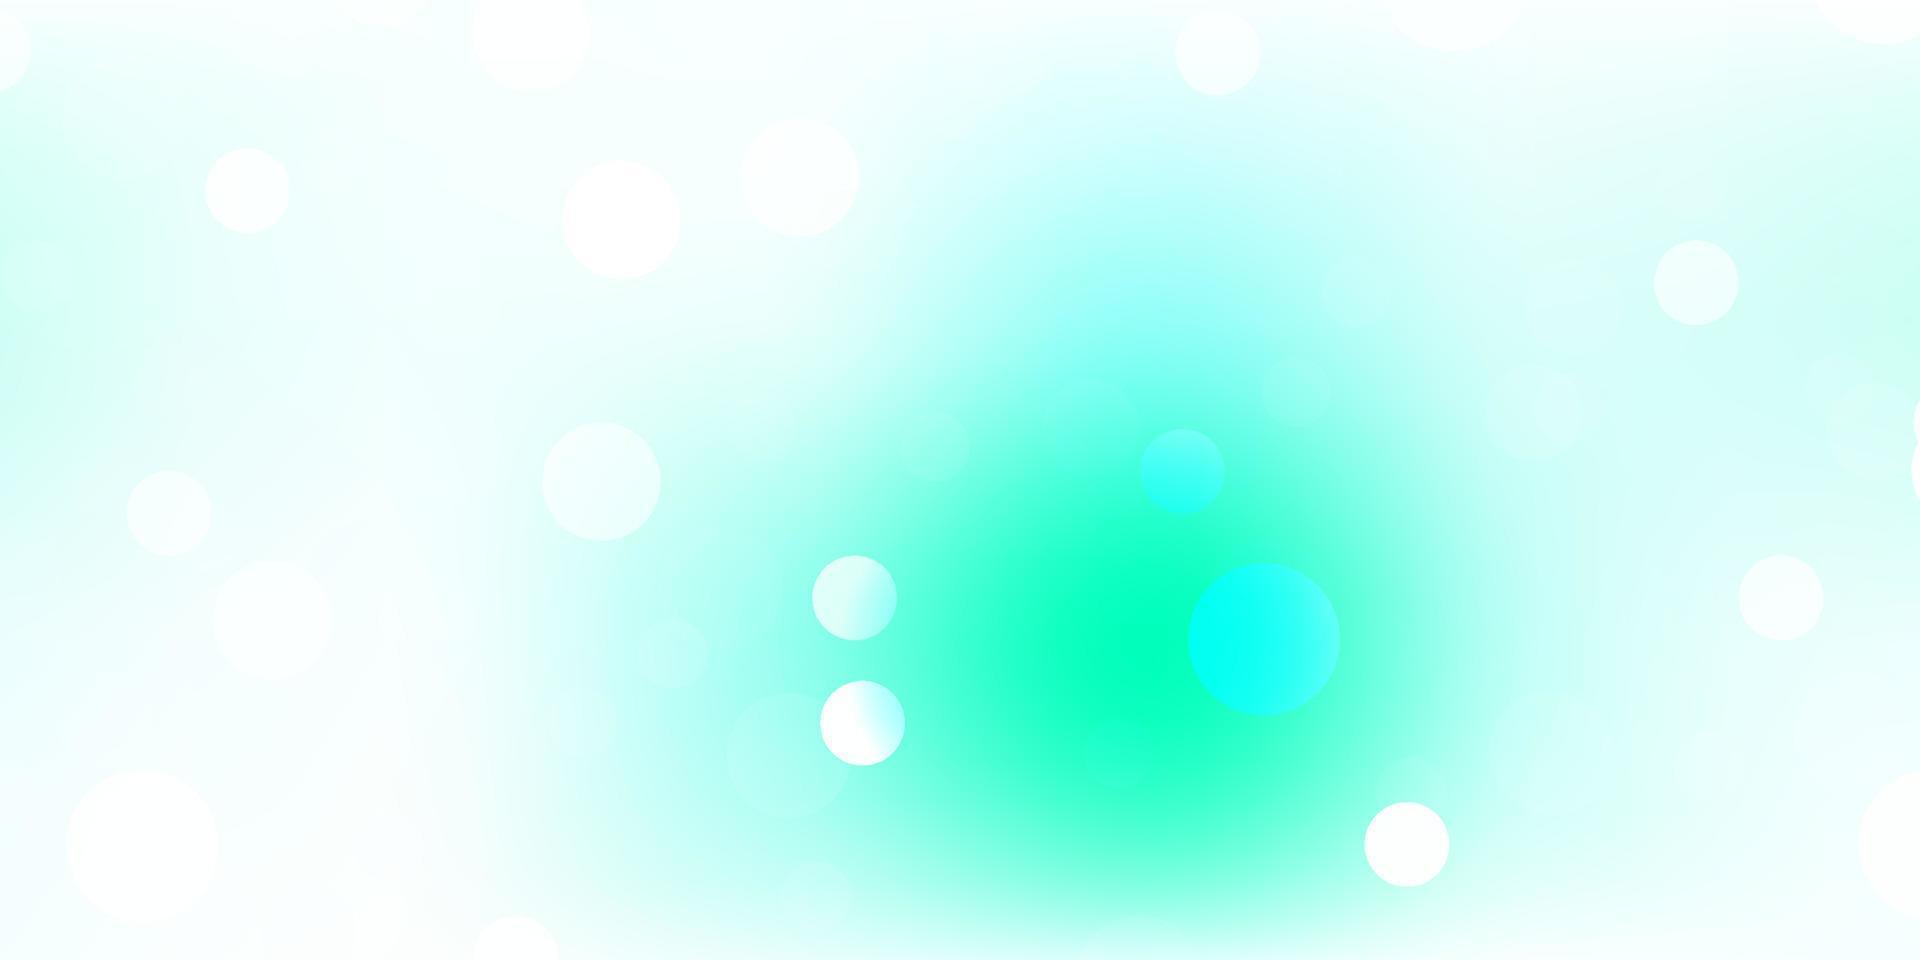 hellgrüne Vektorschablone mit abstrakten Formen. vektor